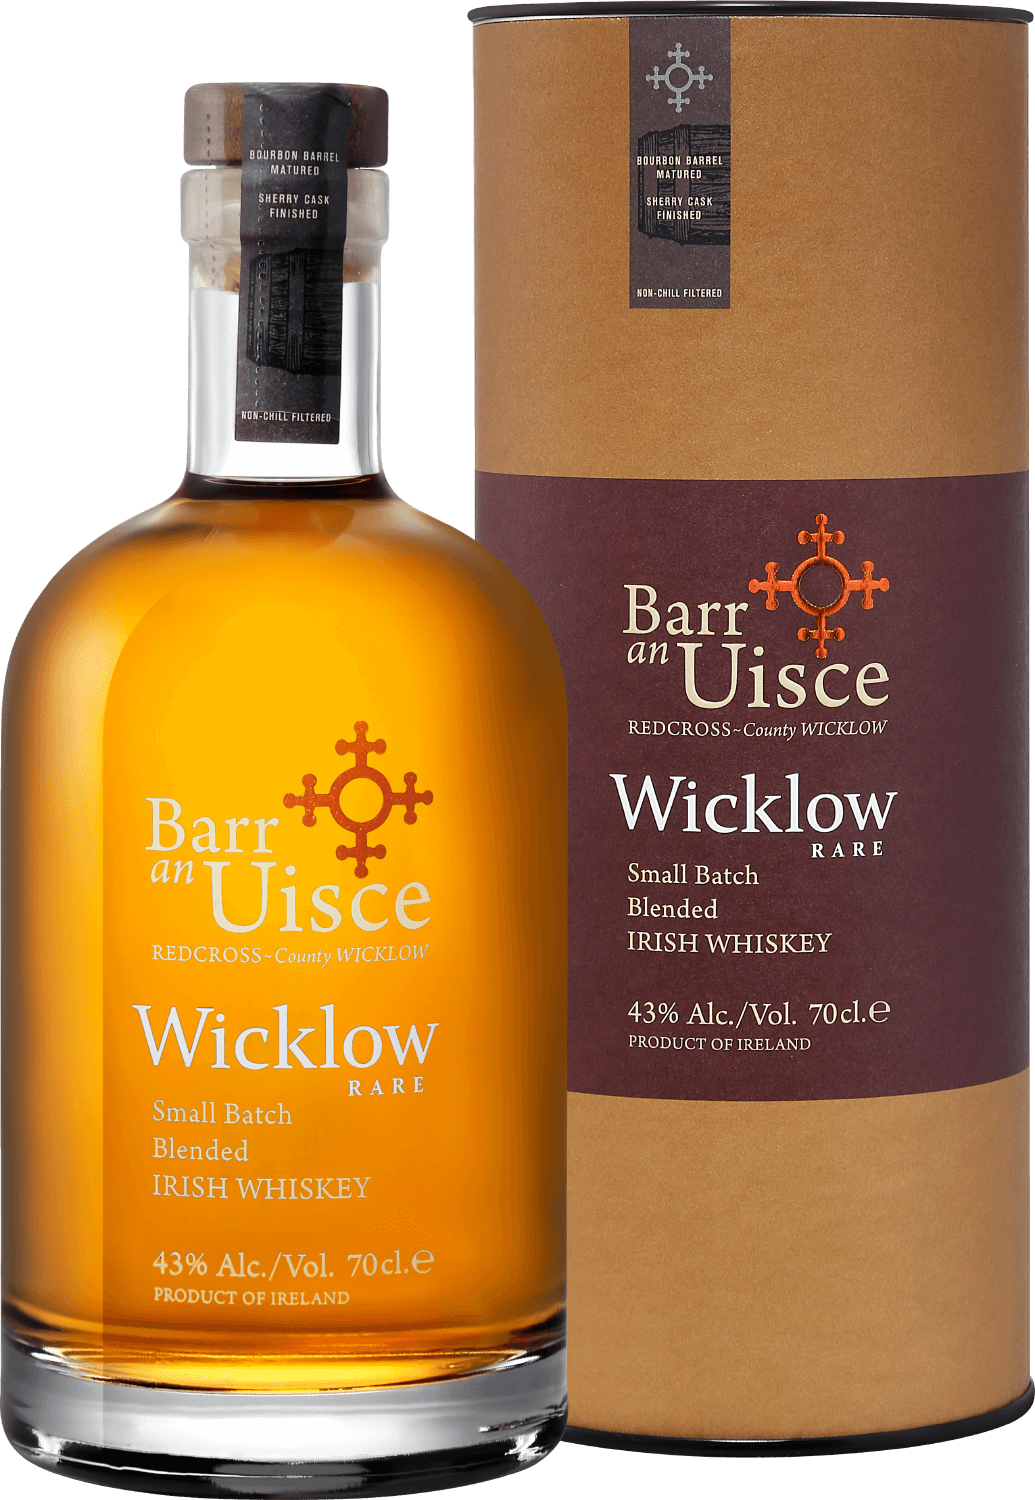 Barr an Uisce Wicklow Rare Small Batch Blended Irish Whiskey 4 YO (gift box) lambay small batch blend irish whiskey 4 y o